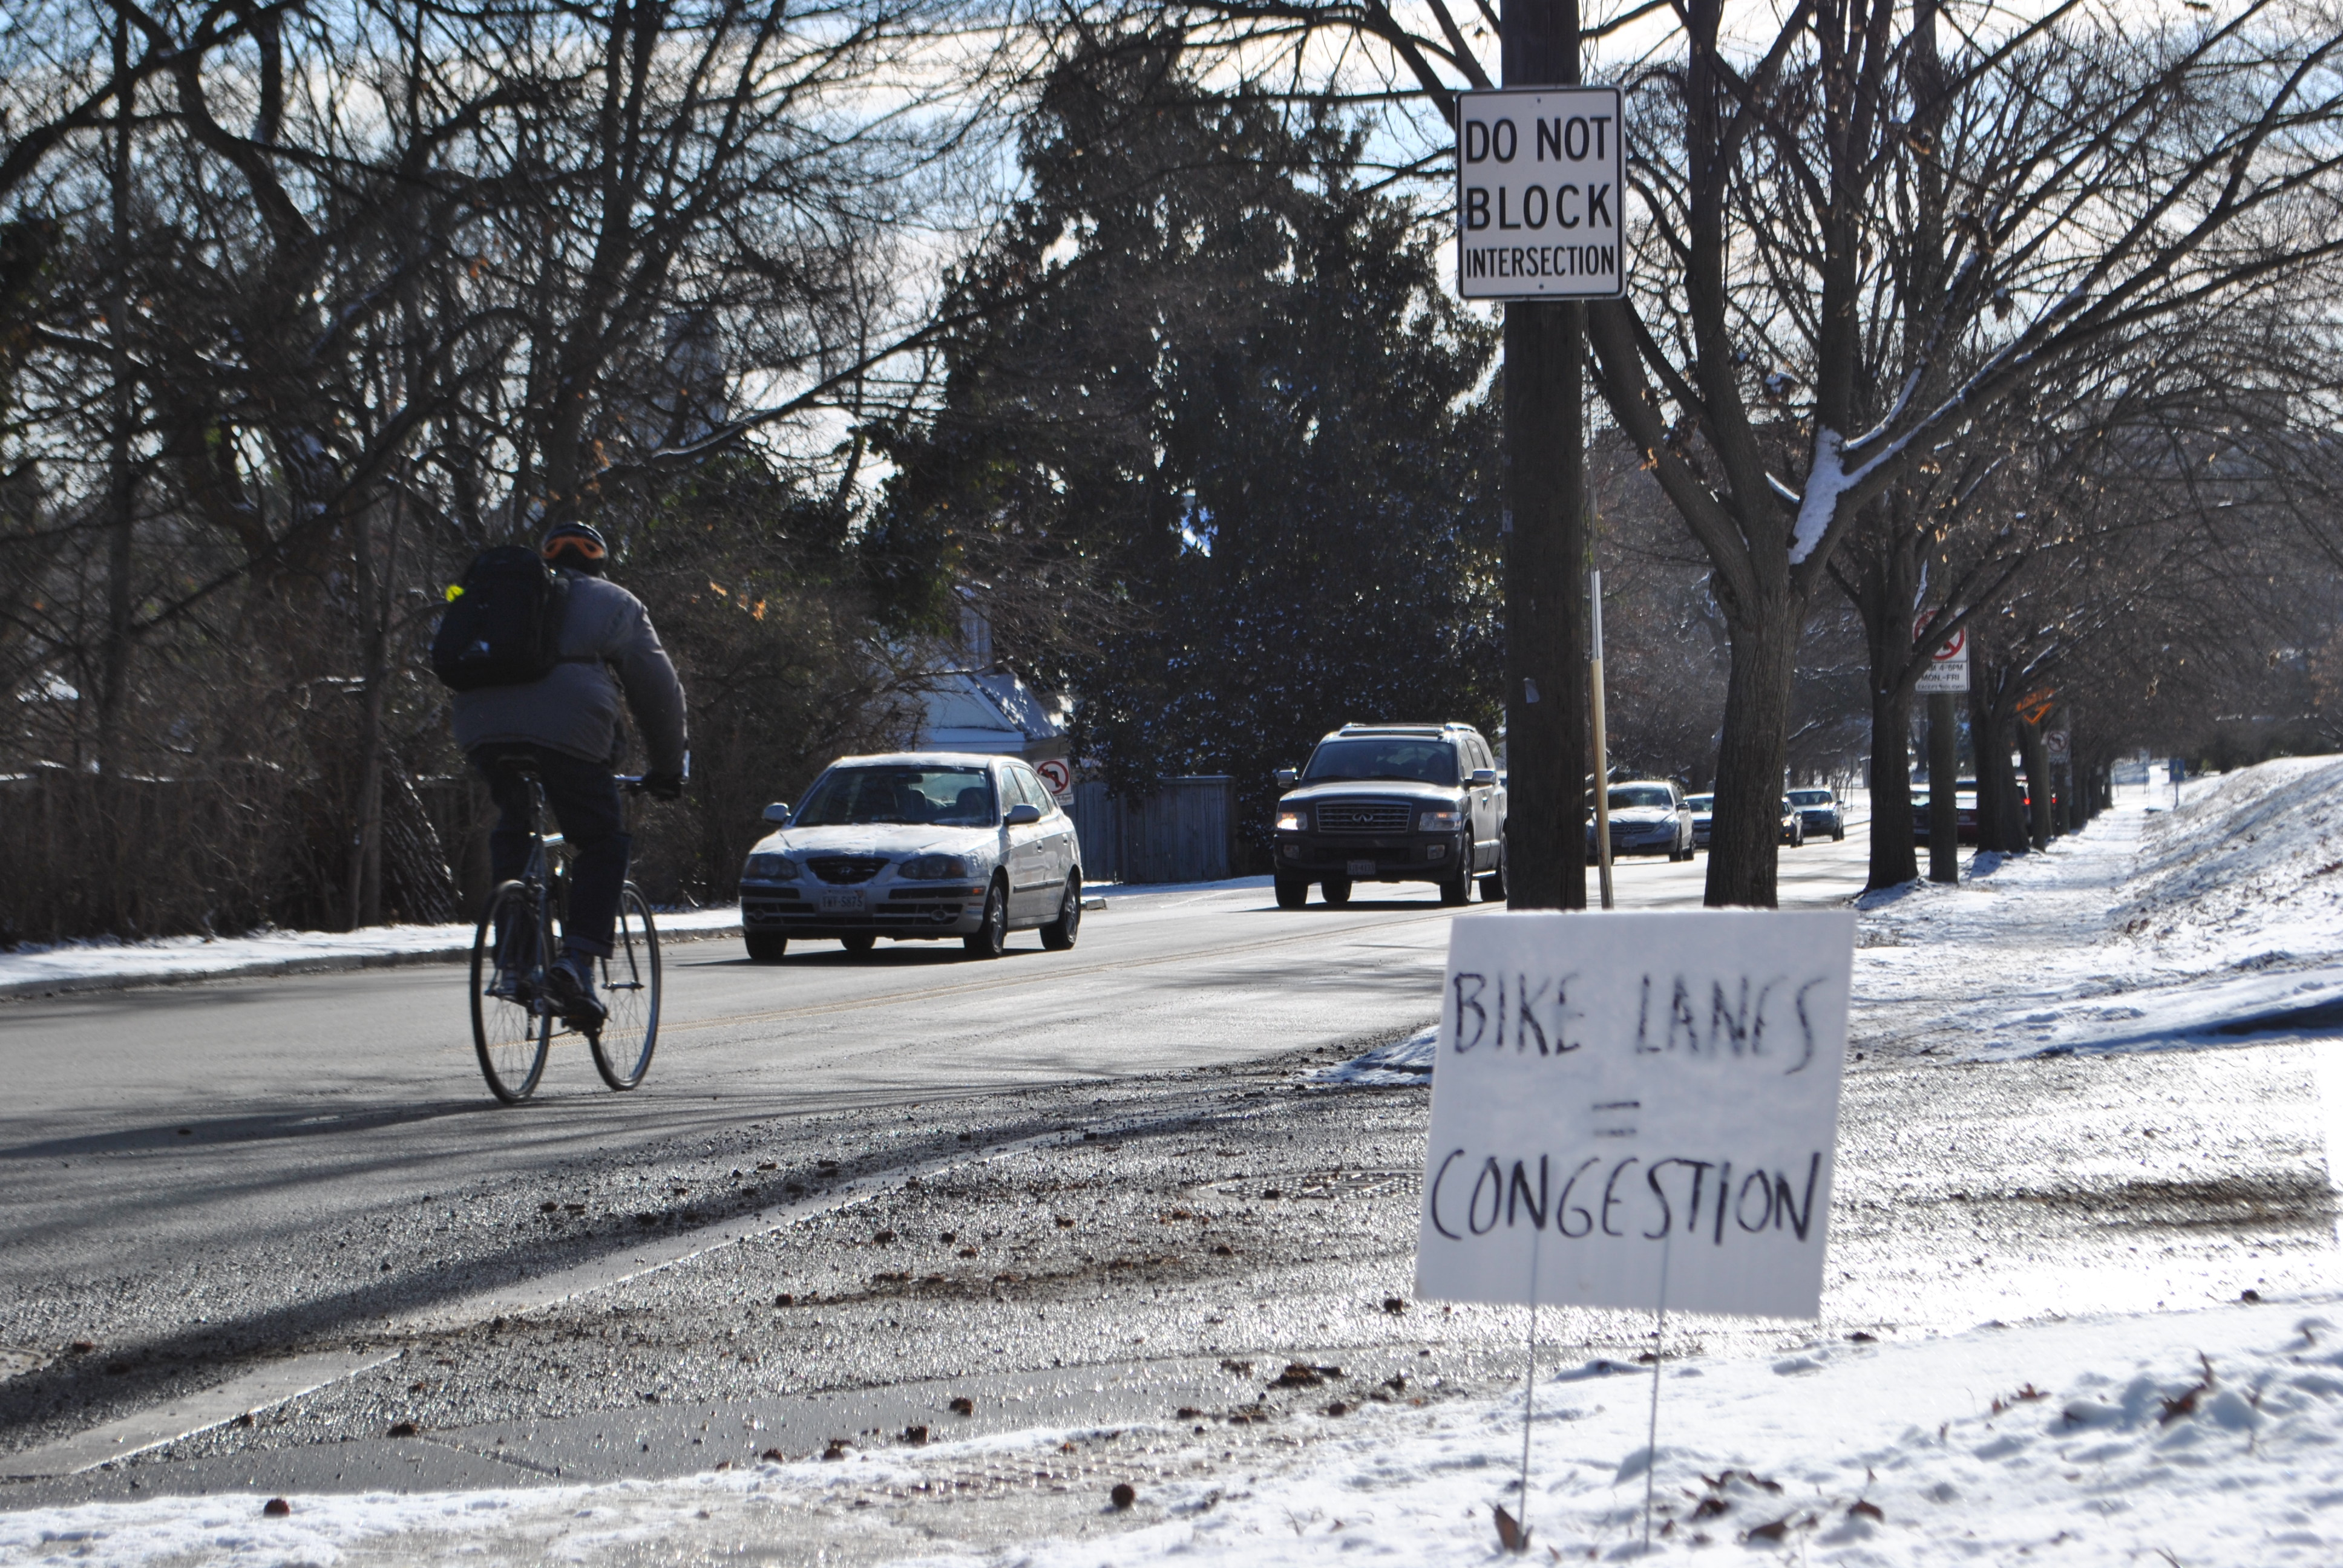 Making the great King Street bike lane debate a personal issue